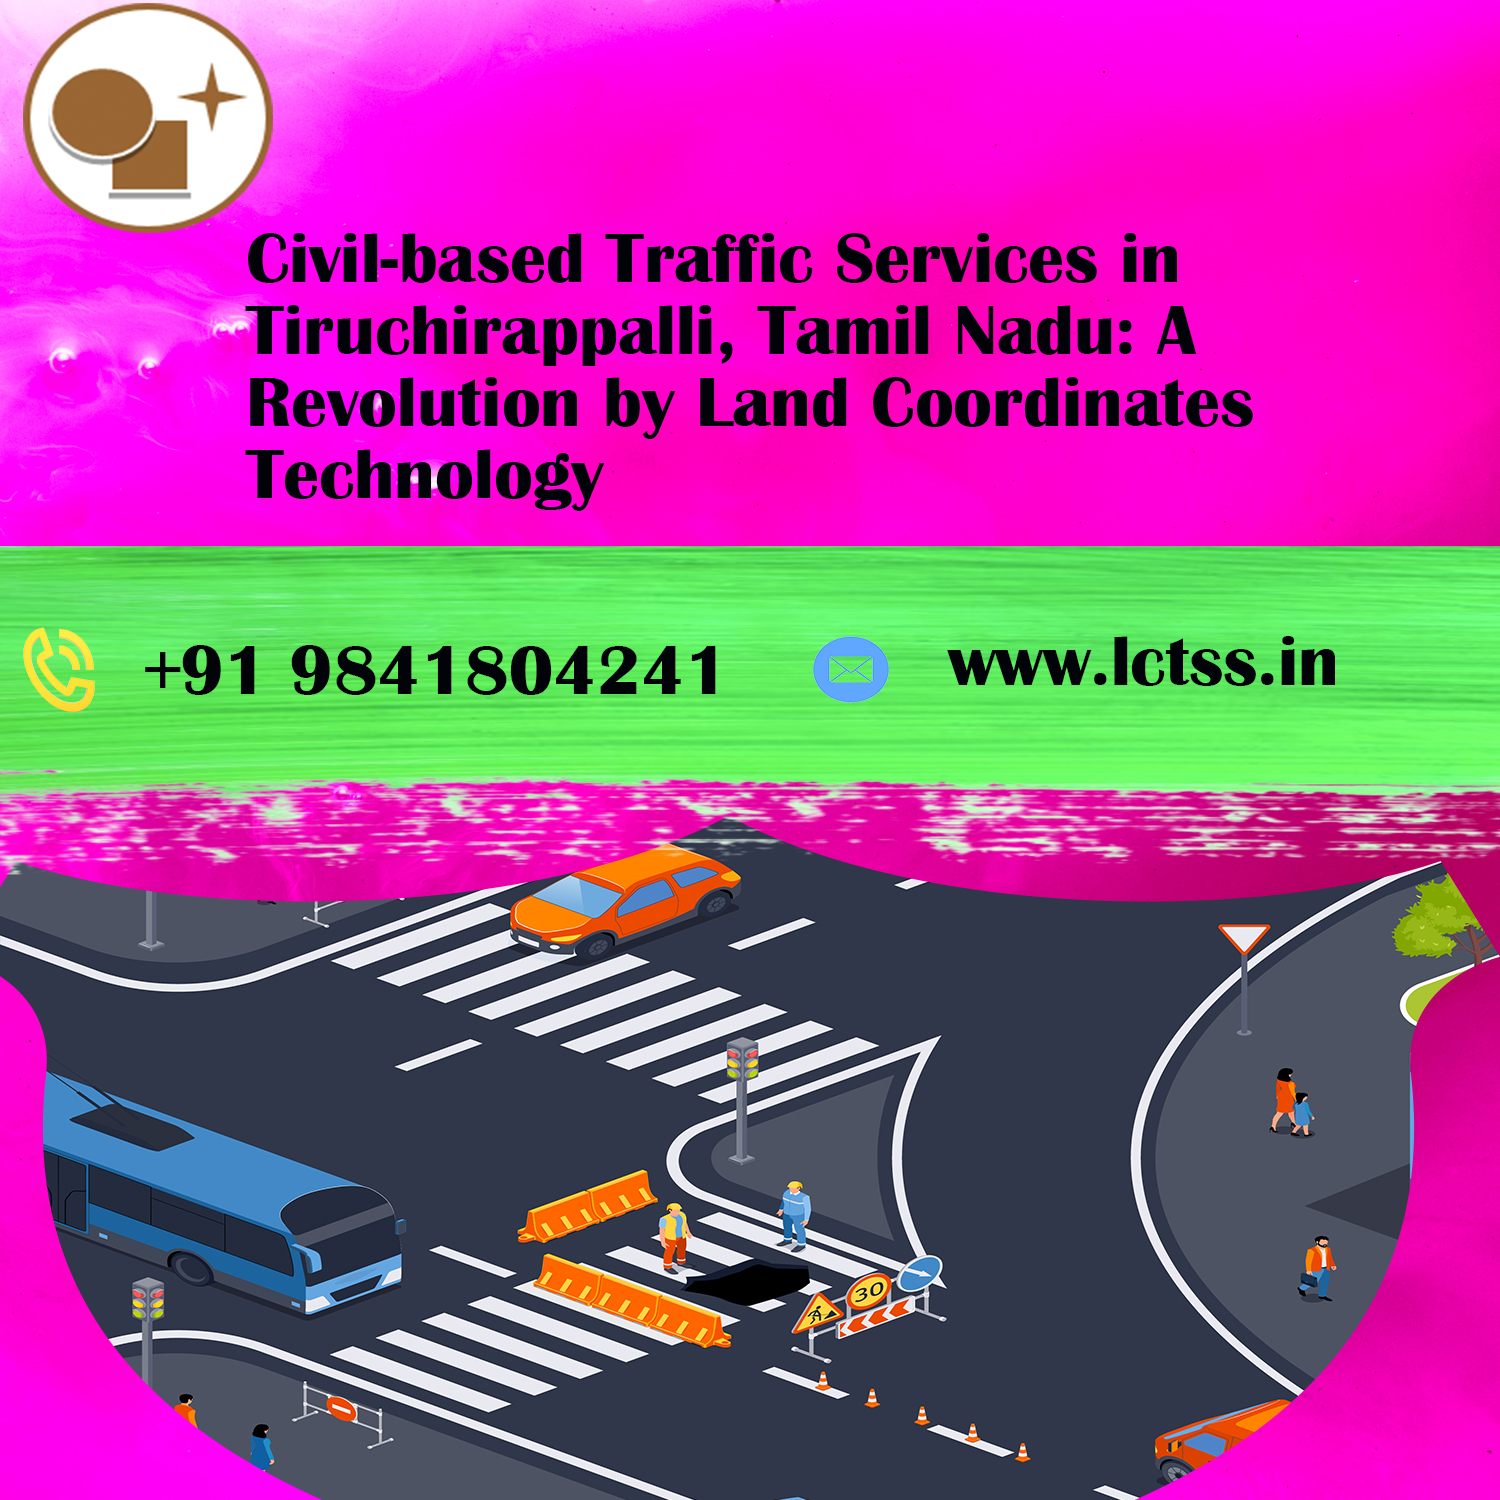 Civil-based Traffic Services in Tiruchirappalli, Tamil Nadu: A Revolution by Land Coordinates Technology